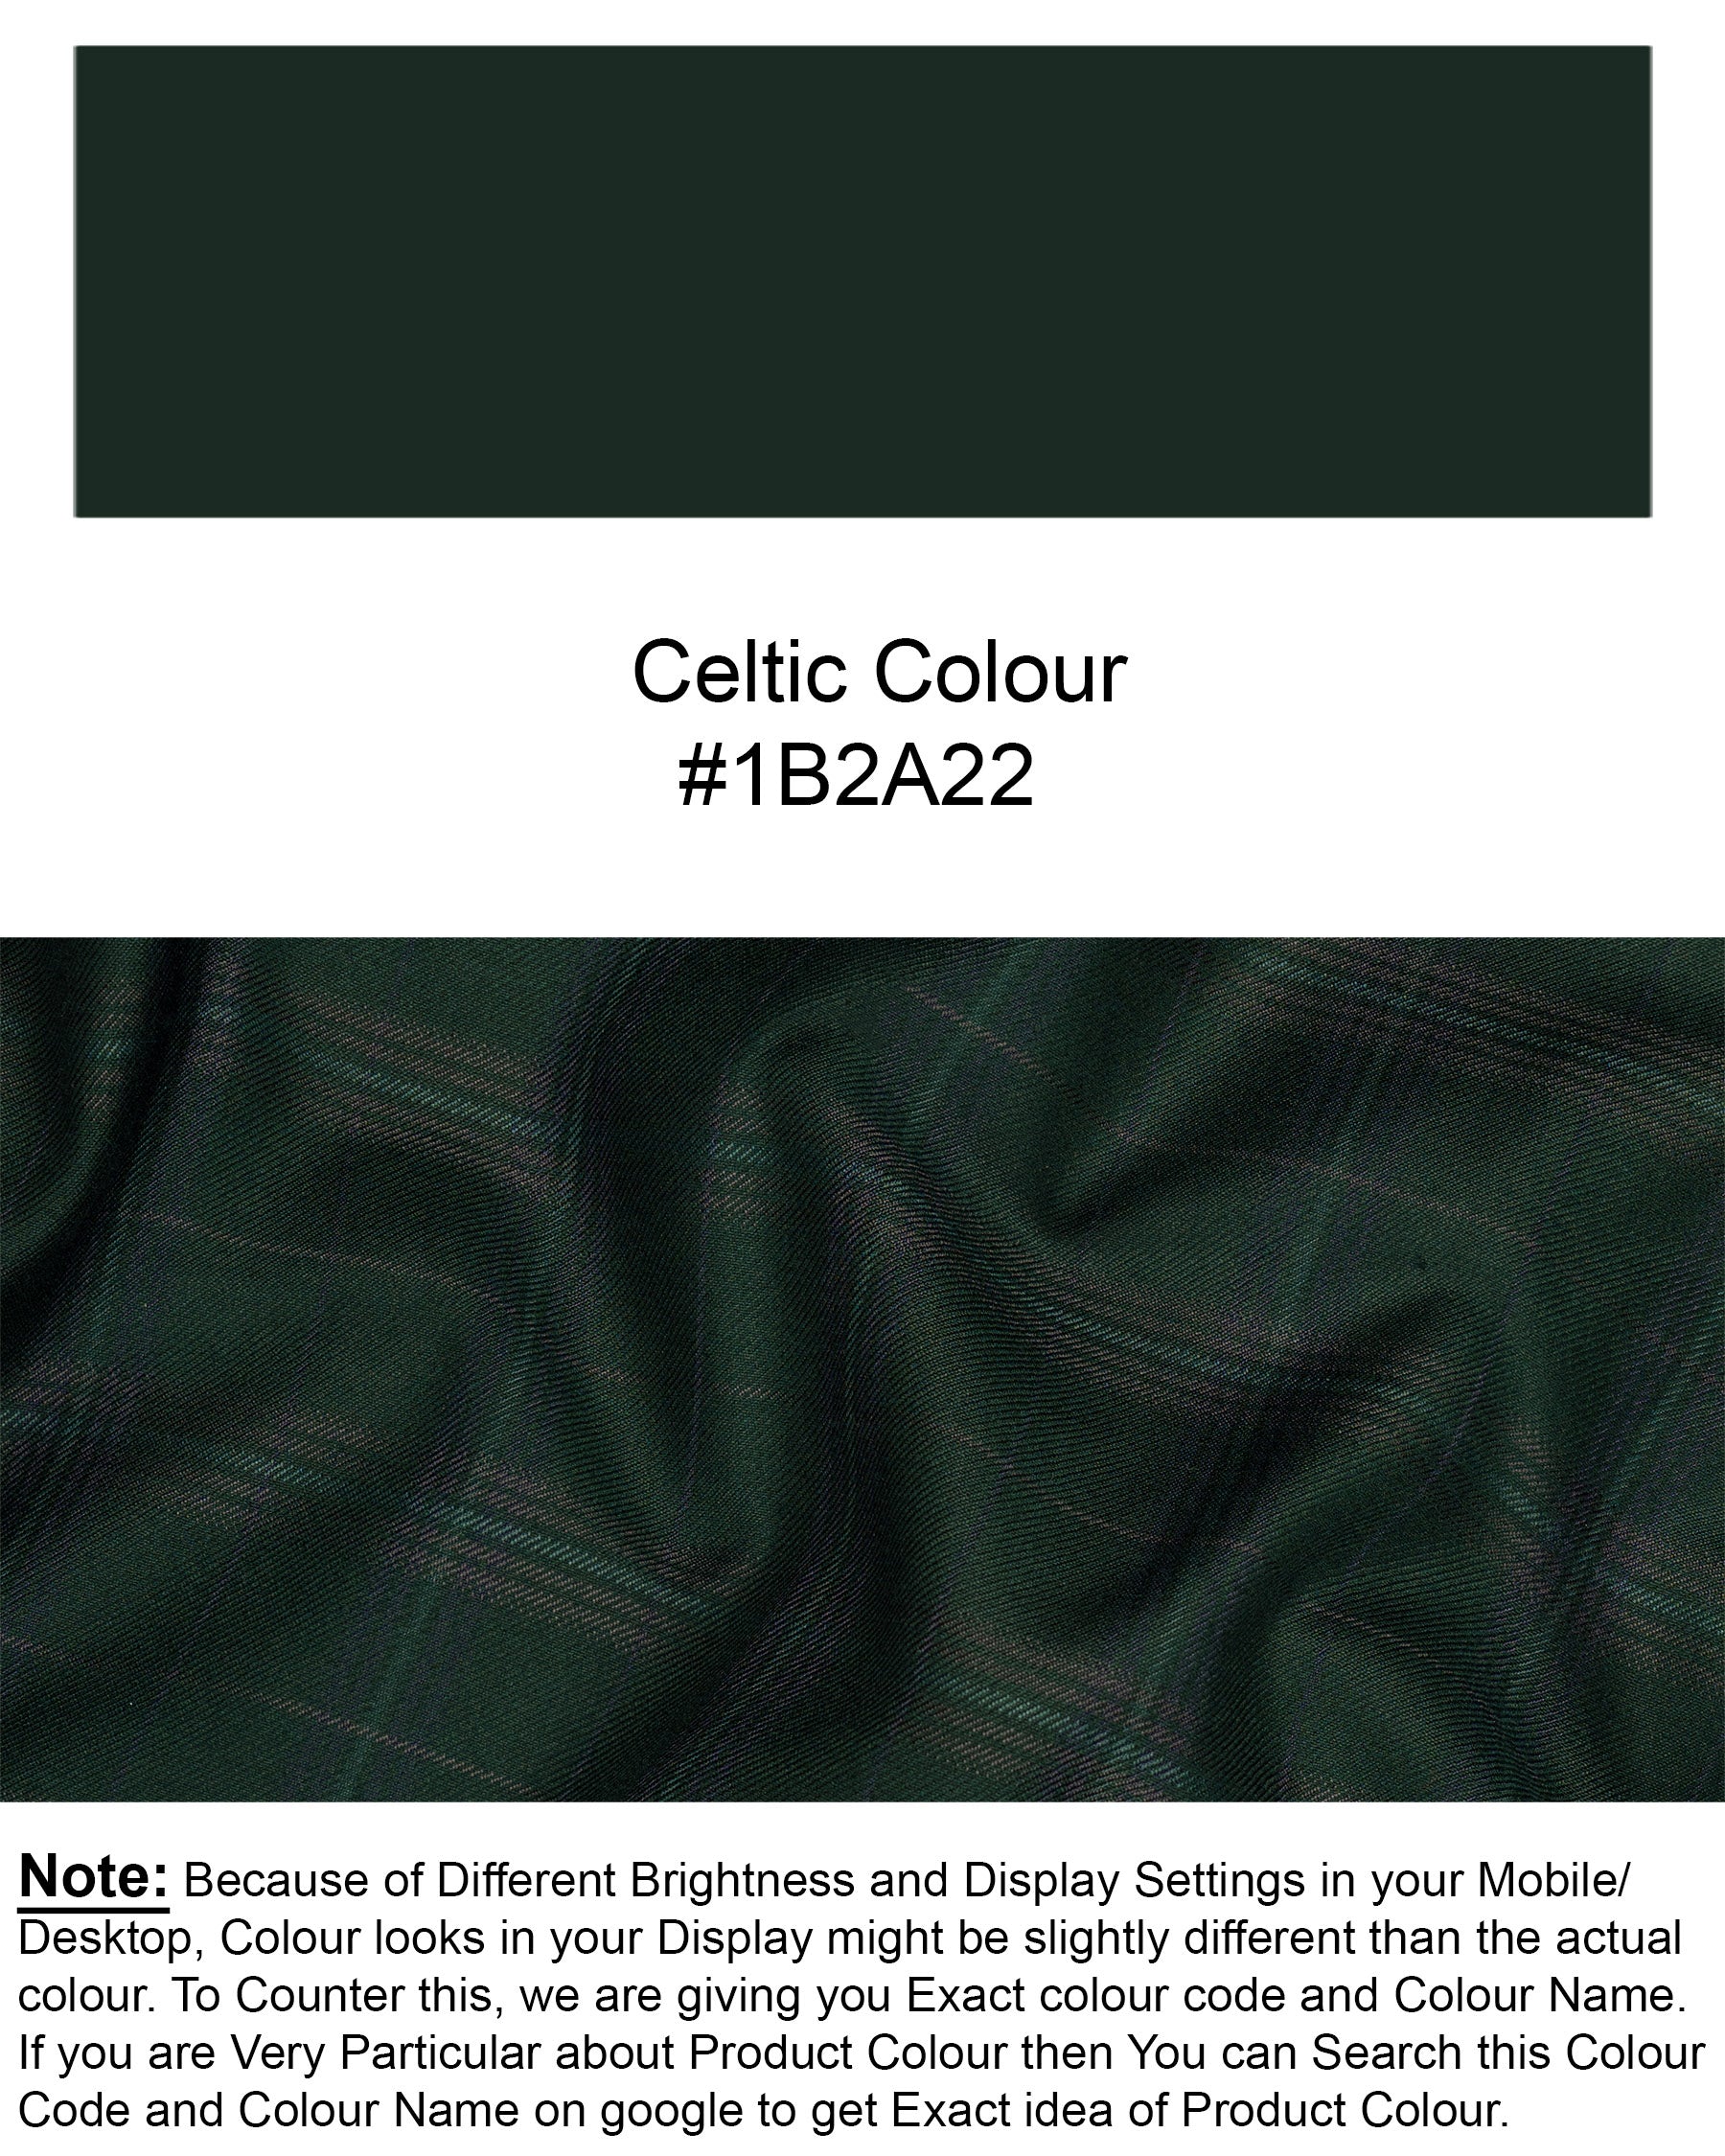 Celtic Green Super fine Plaid Woolrich Waistcoat V1629-36, V1629-38, V1629-40, V1629-42, V1629-44, V1629-46, V1629-48, V1629-50, V1629-52, V1629-54, V1629-56, V1629-58, V1629-60